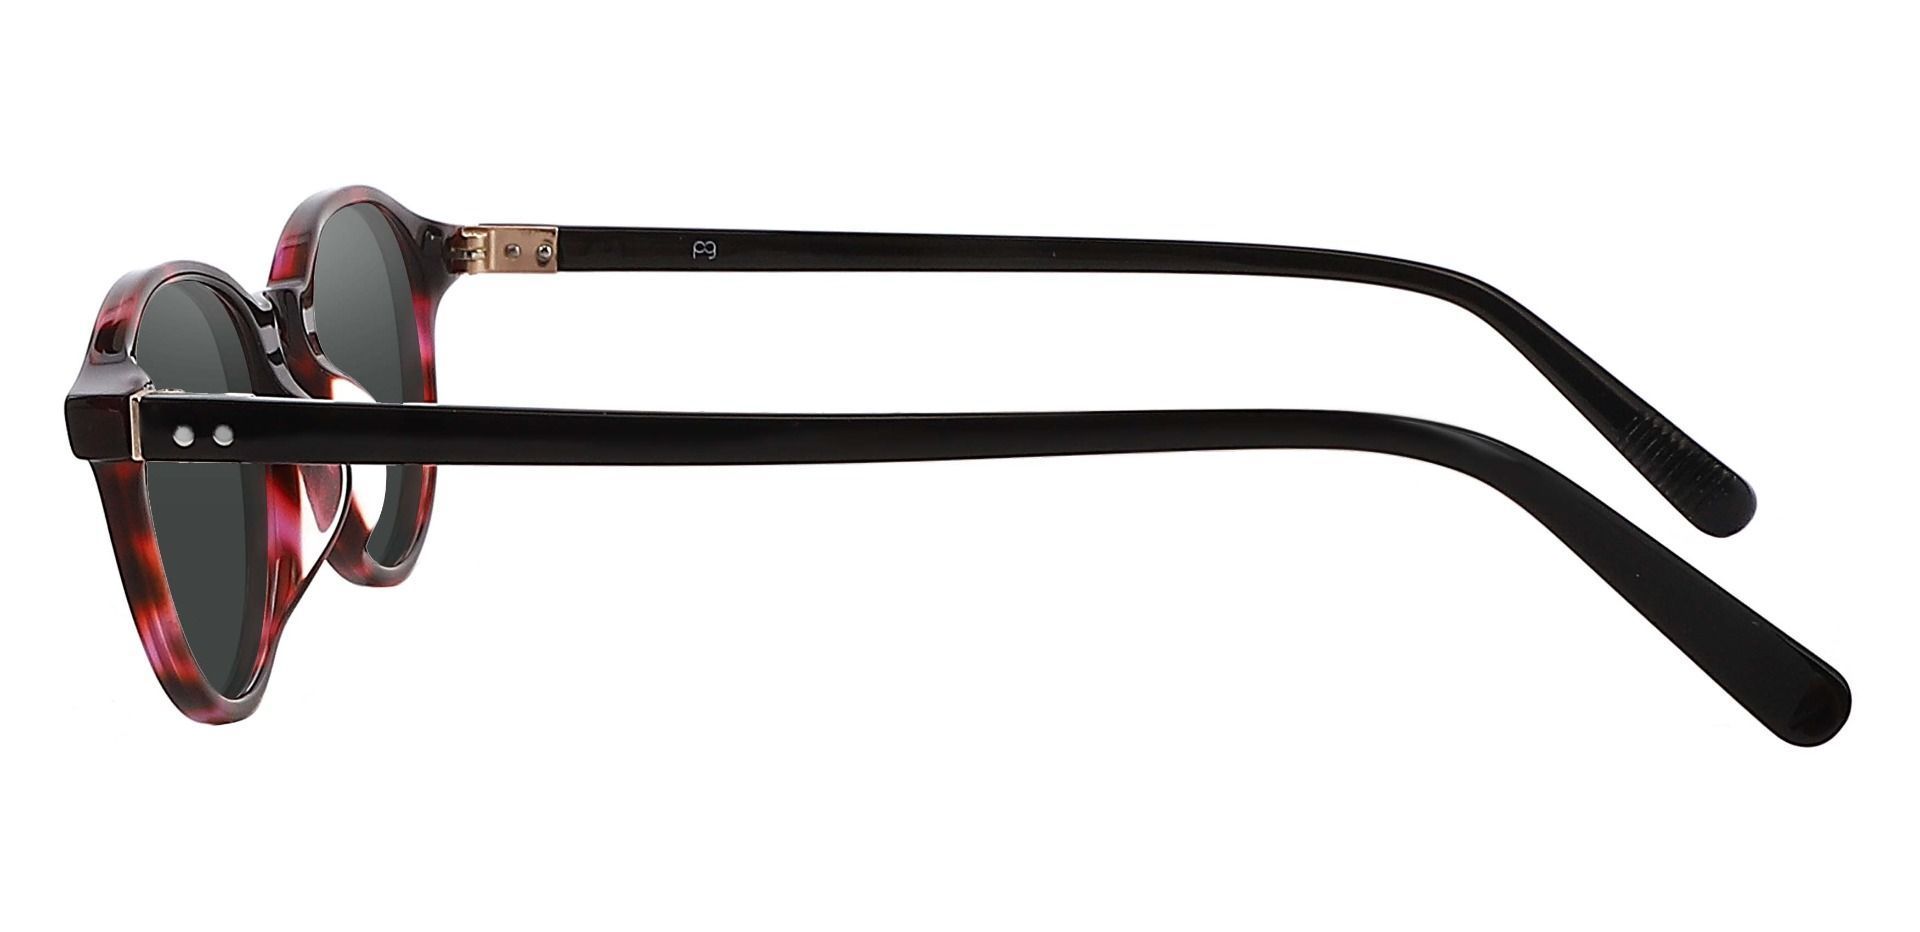 Avon Oval Non-Rx Sunglasses - Tortoise Frame With Gray Lenses